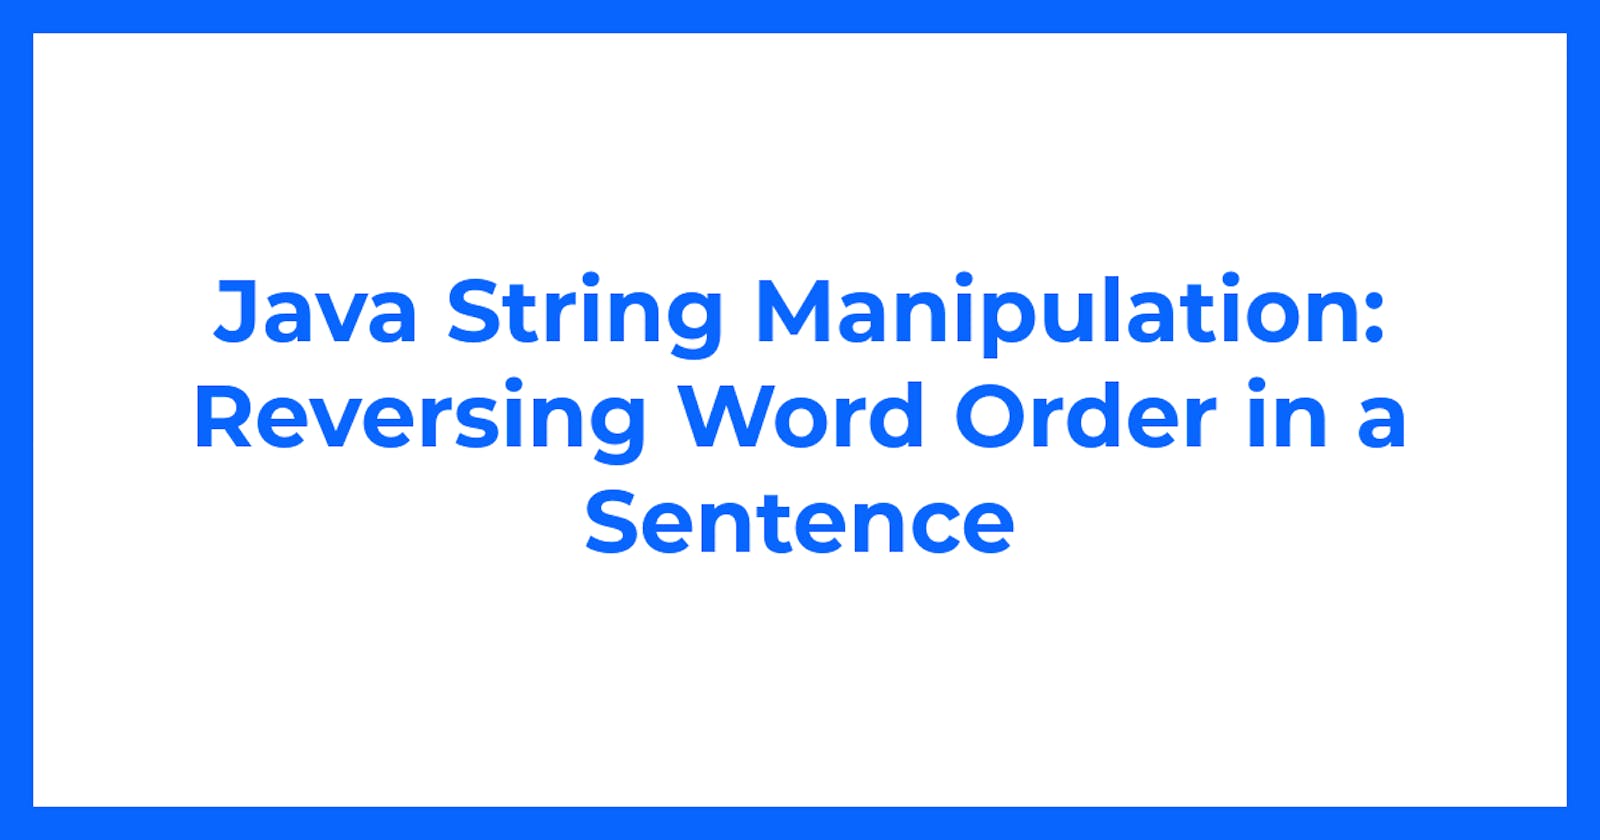 Java String Manipulation: Reversing Word Order in a Sentence